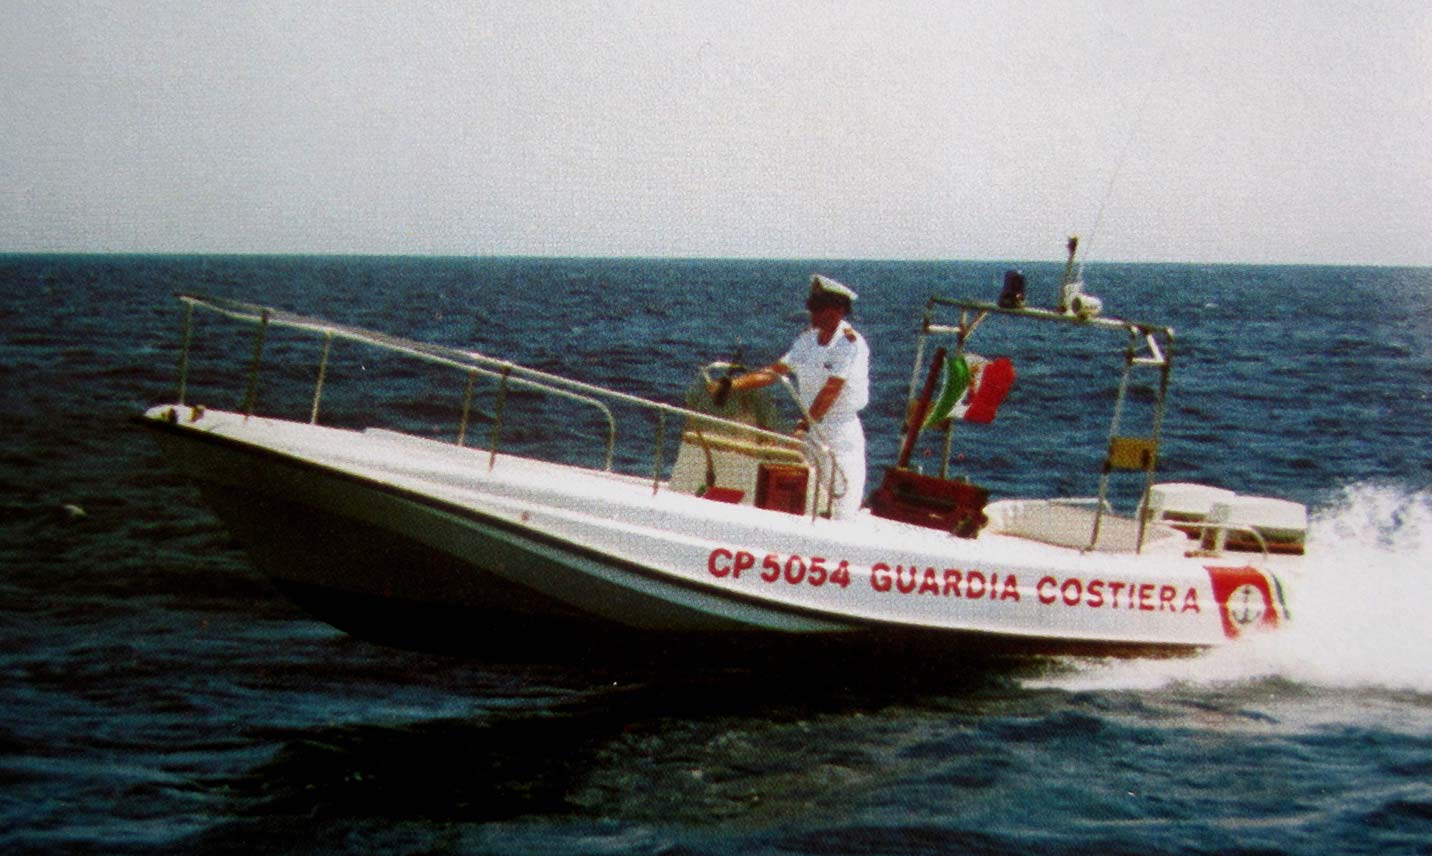 CP 5054